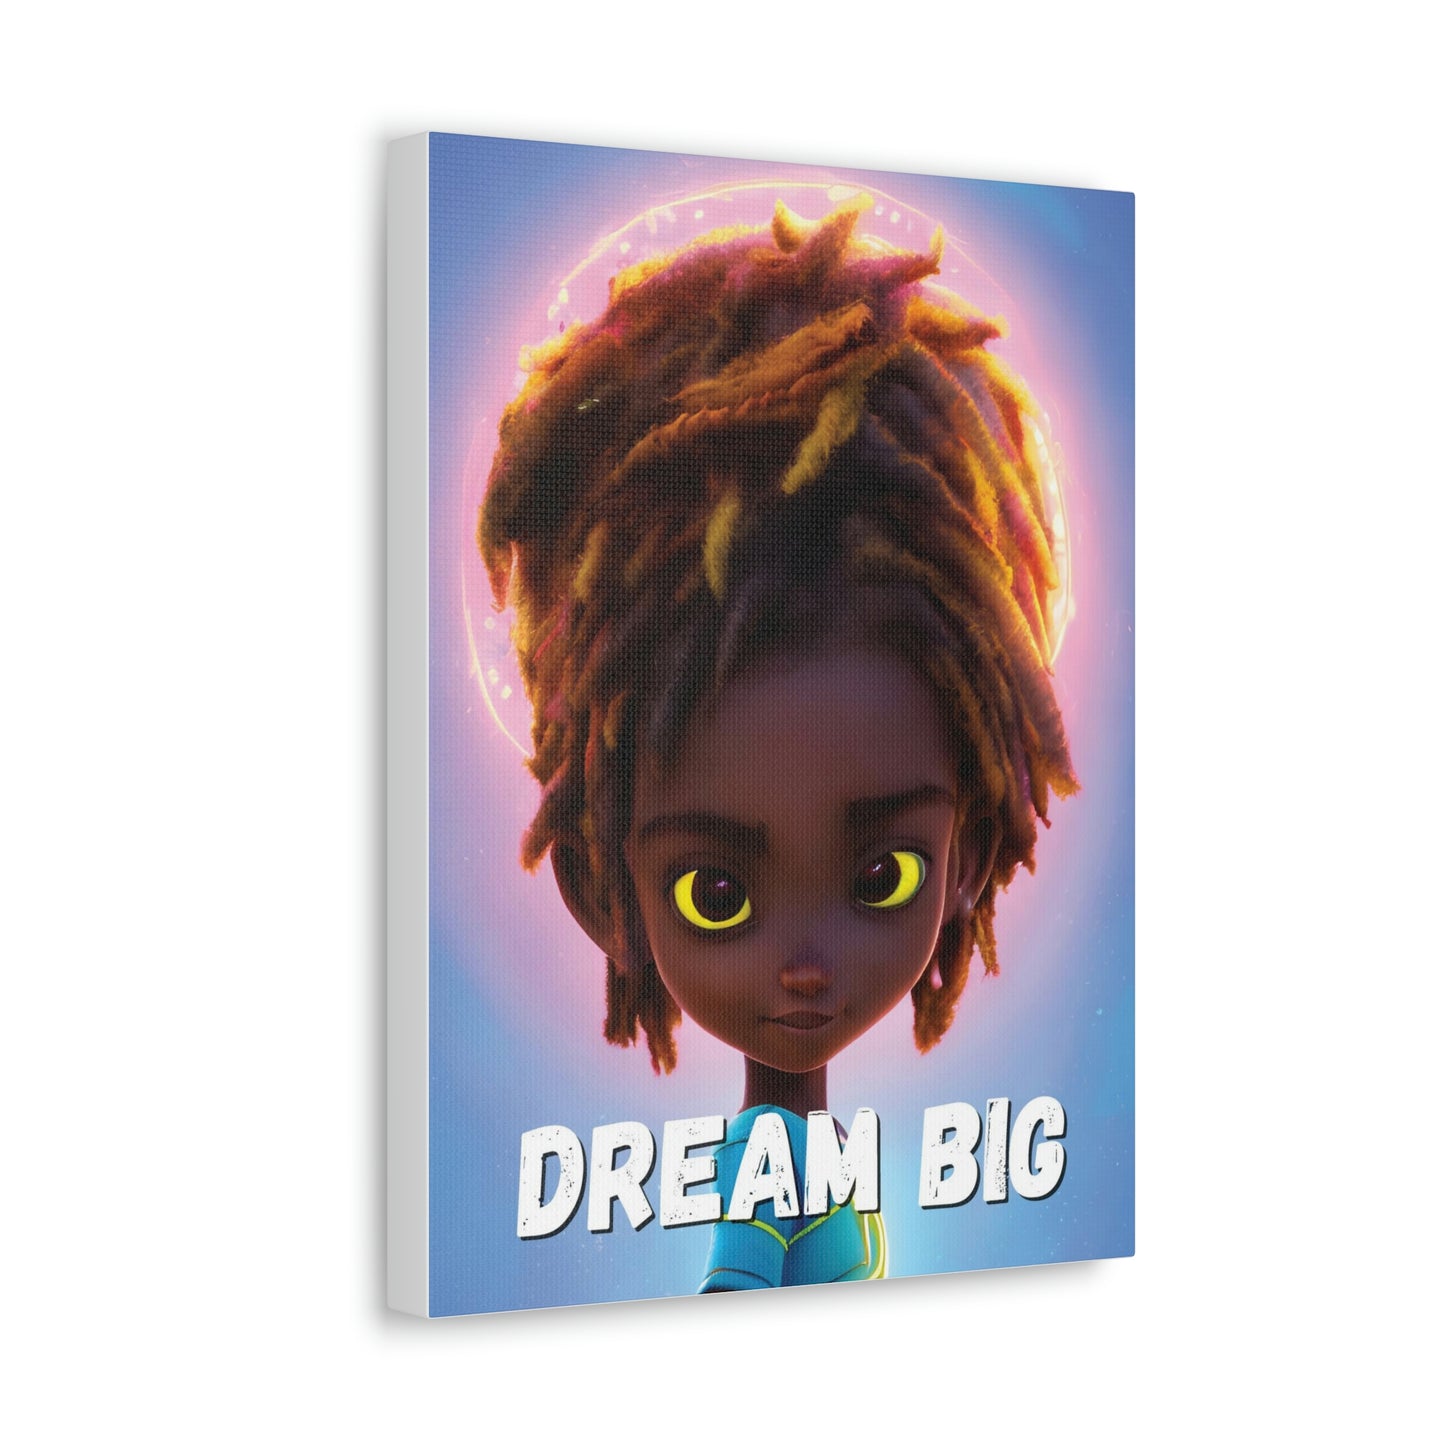 Dream Big: Celebrating Ambition And Empowerment